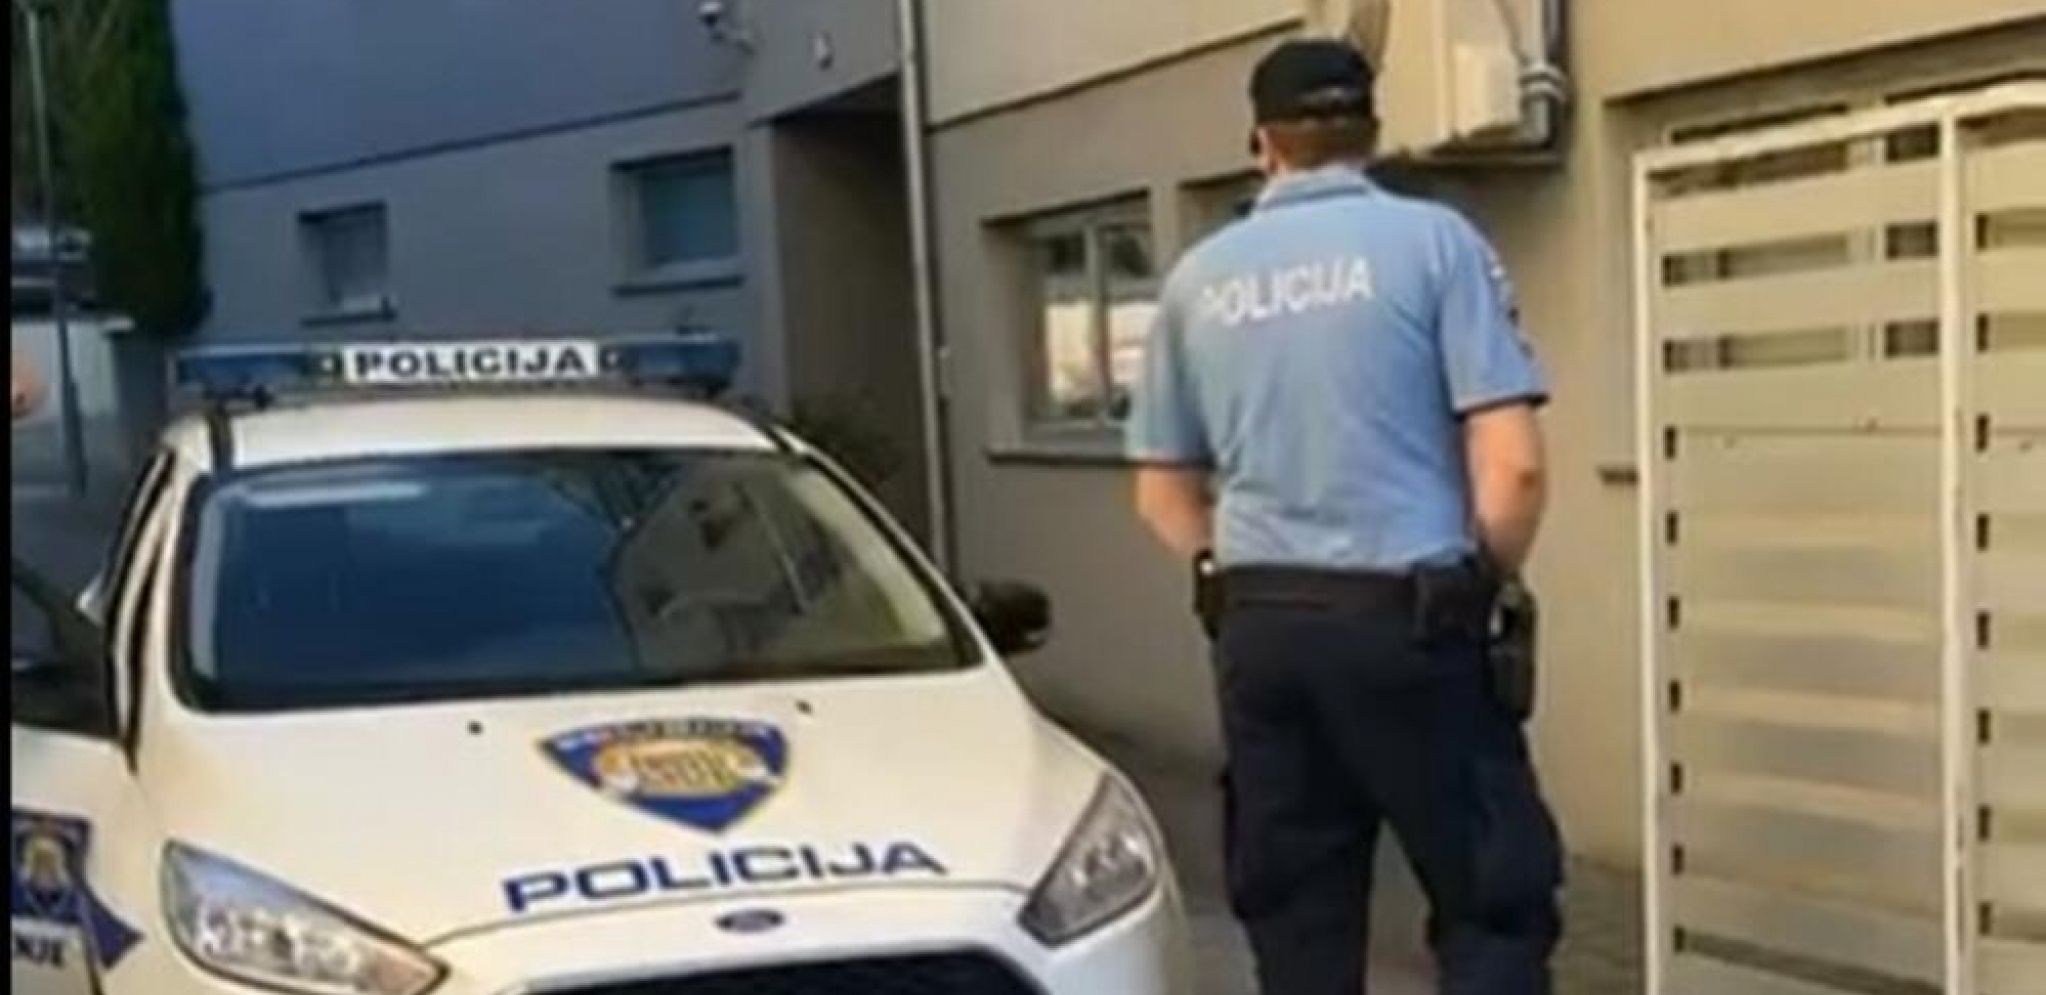 "GRAĐANI, OPREZ!" Alarmantno upozorenje hrvatske policije povodom nove prevare!